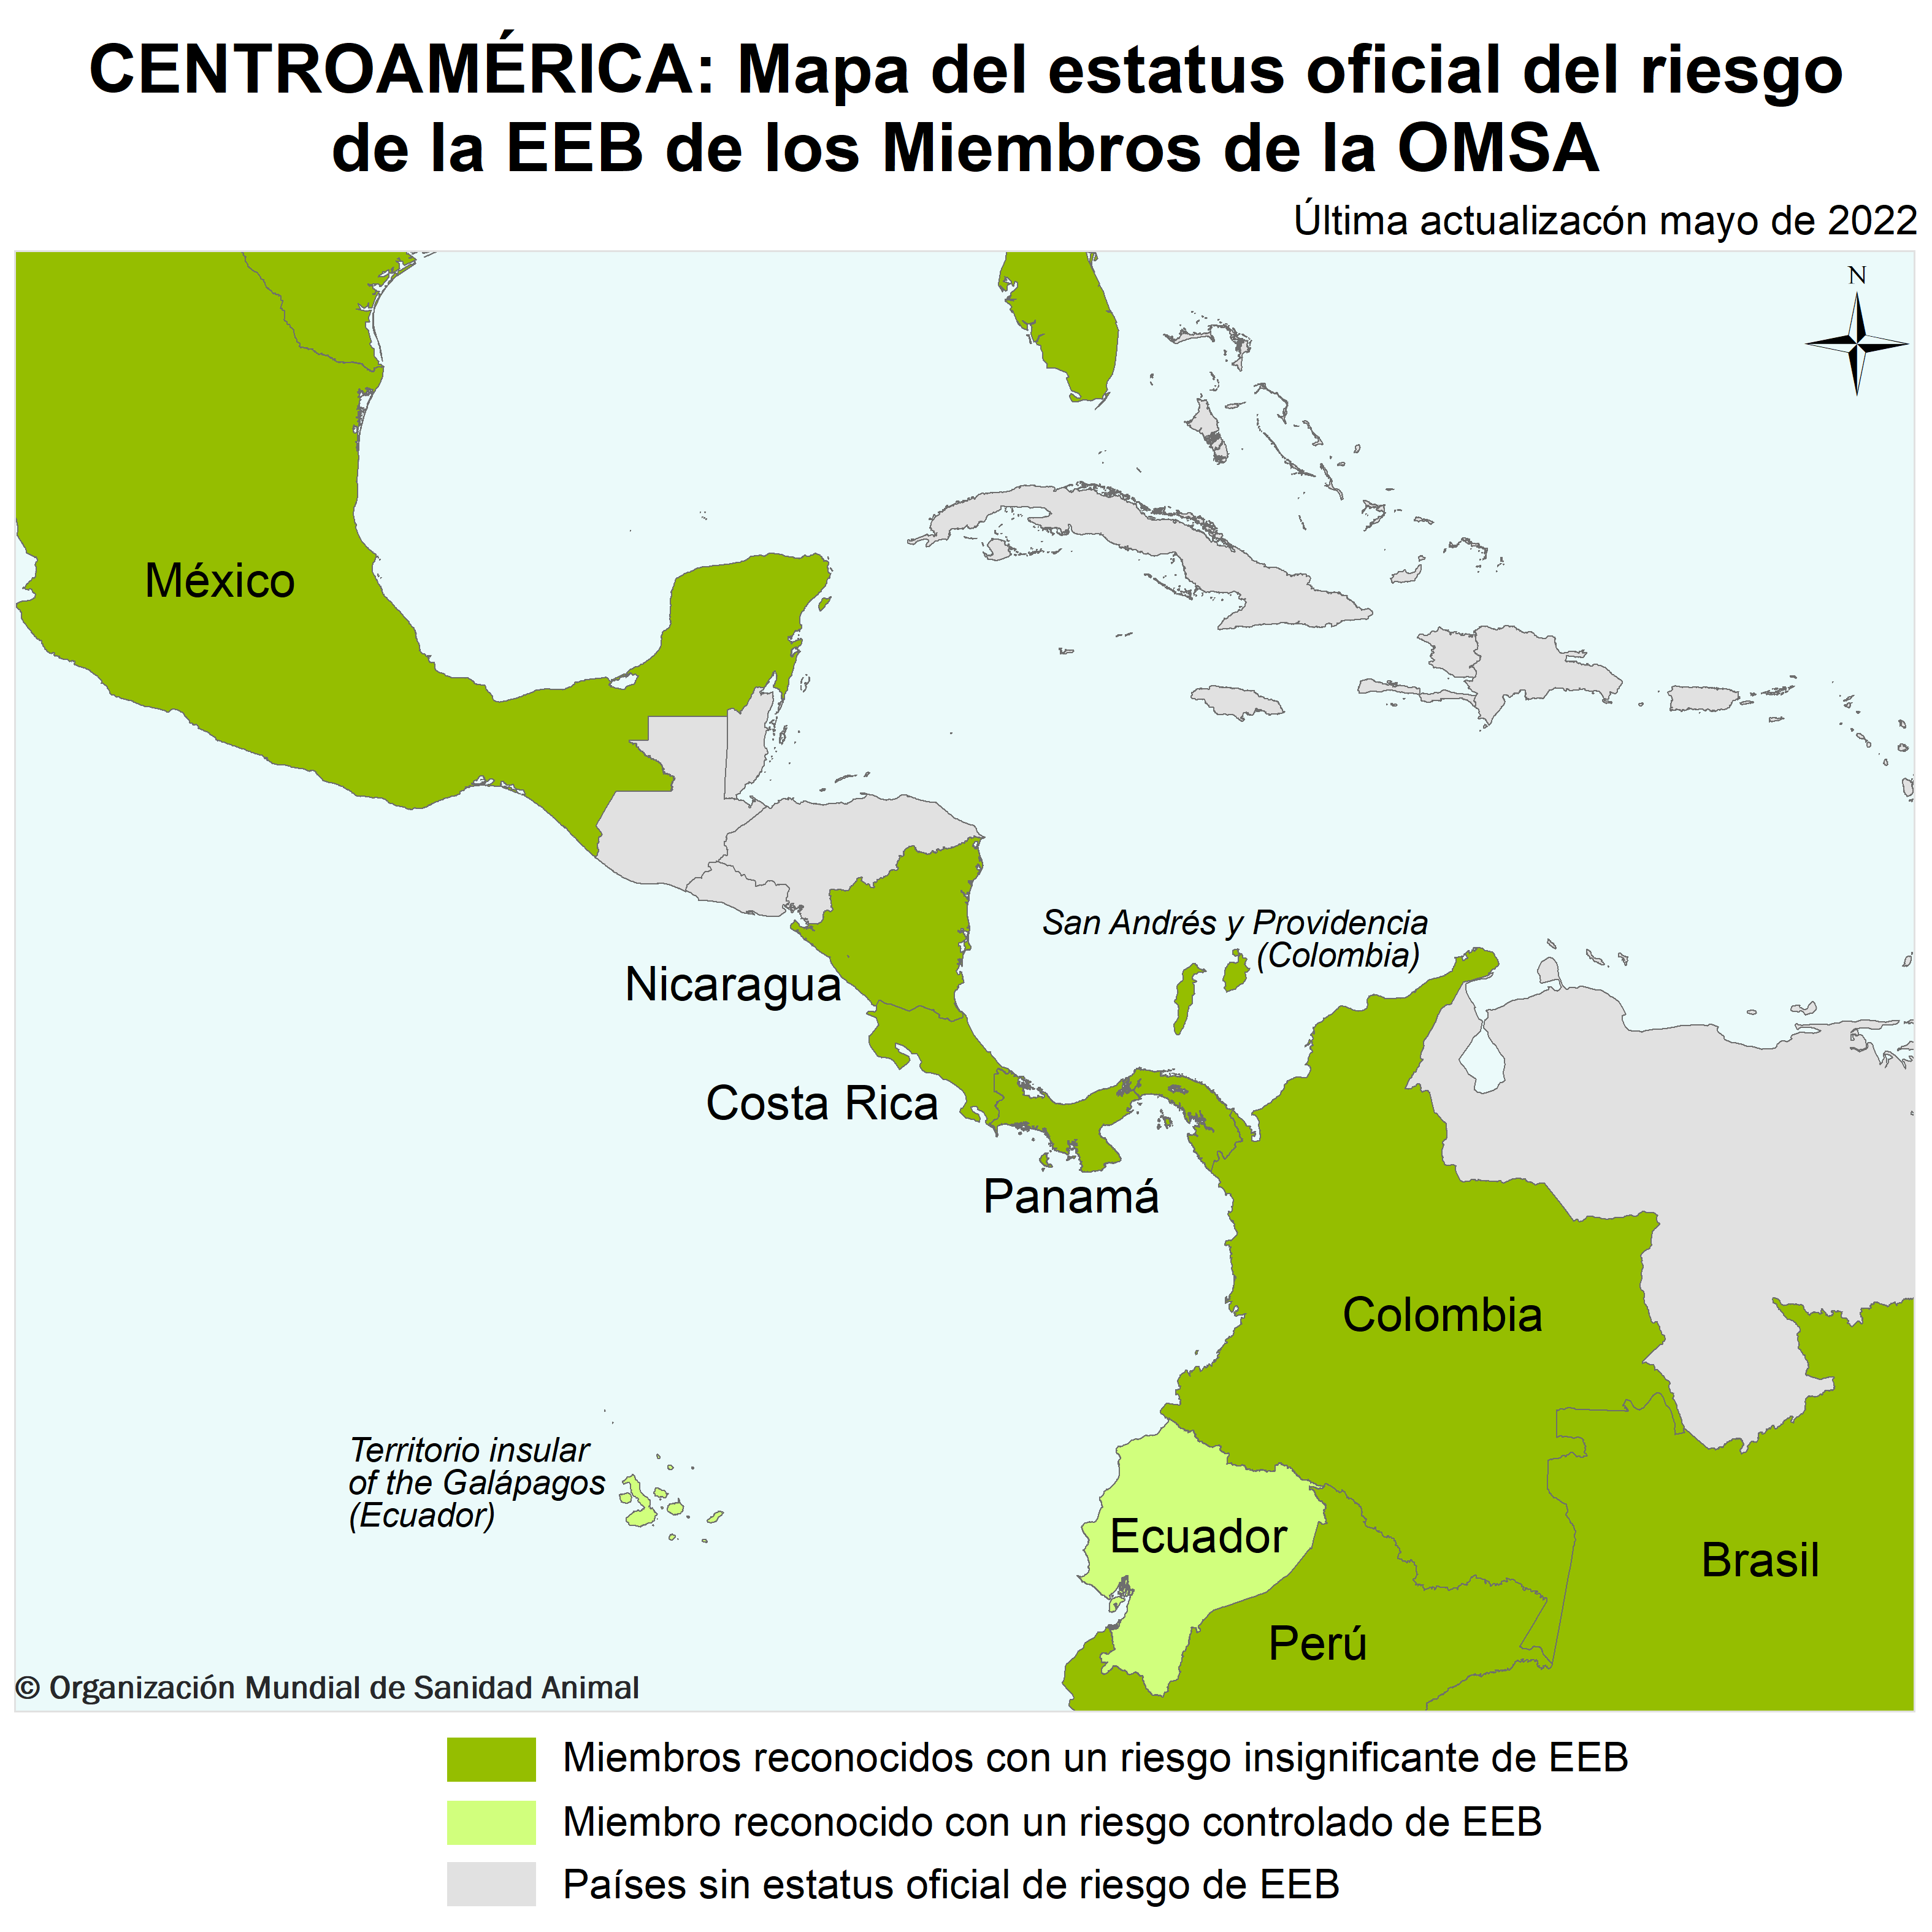 EEB Mapa Central America